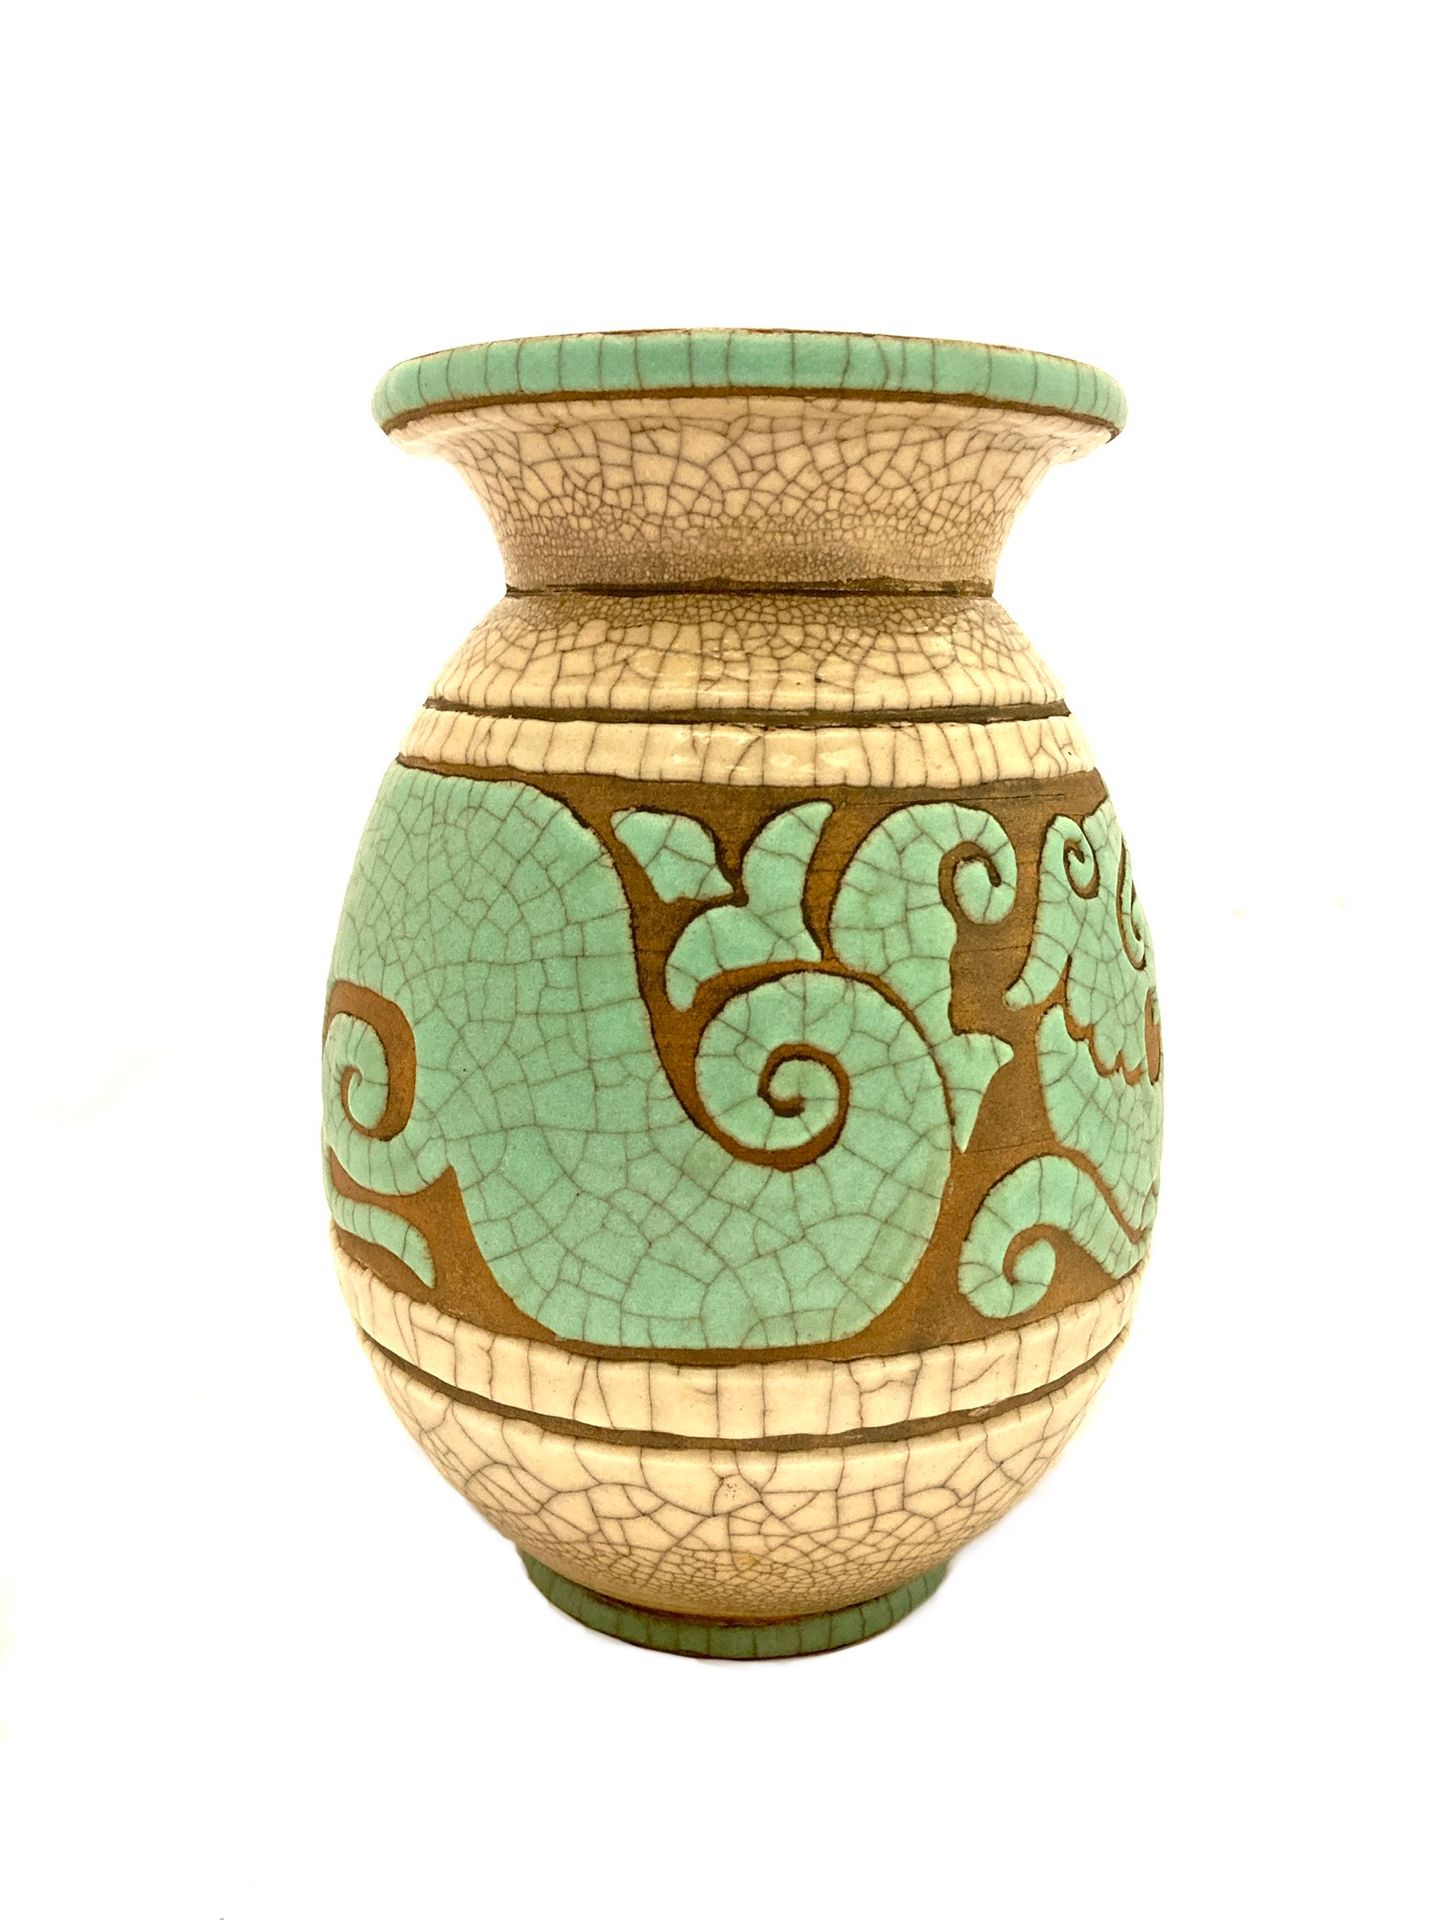 Null 
勒内-布特霍德1886-1986年。 

釉面陶器的卵形花瓶。

左下角预留有猫科动物爬行的绿松石珐琅彩装饰。 

底座下有签名 "RB"。

高度&hellip;